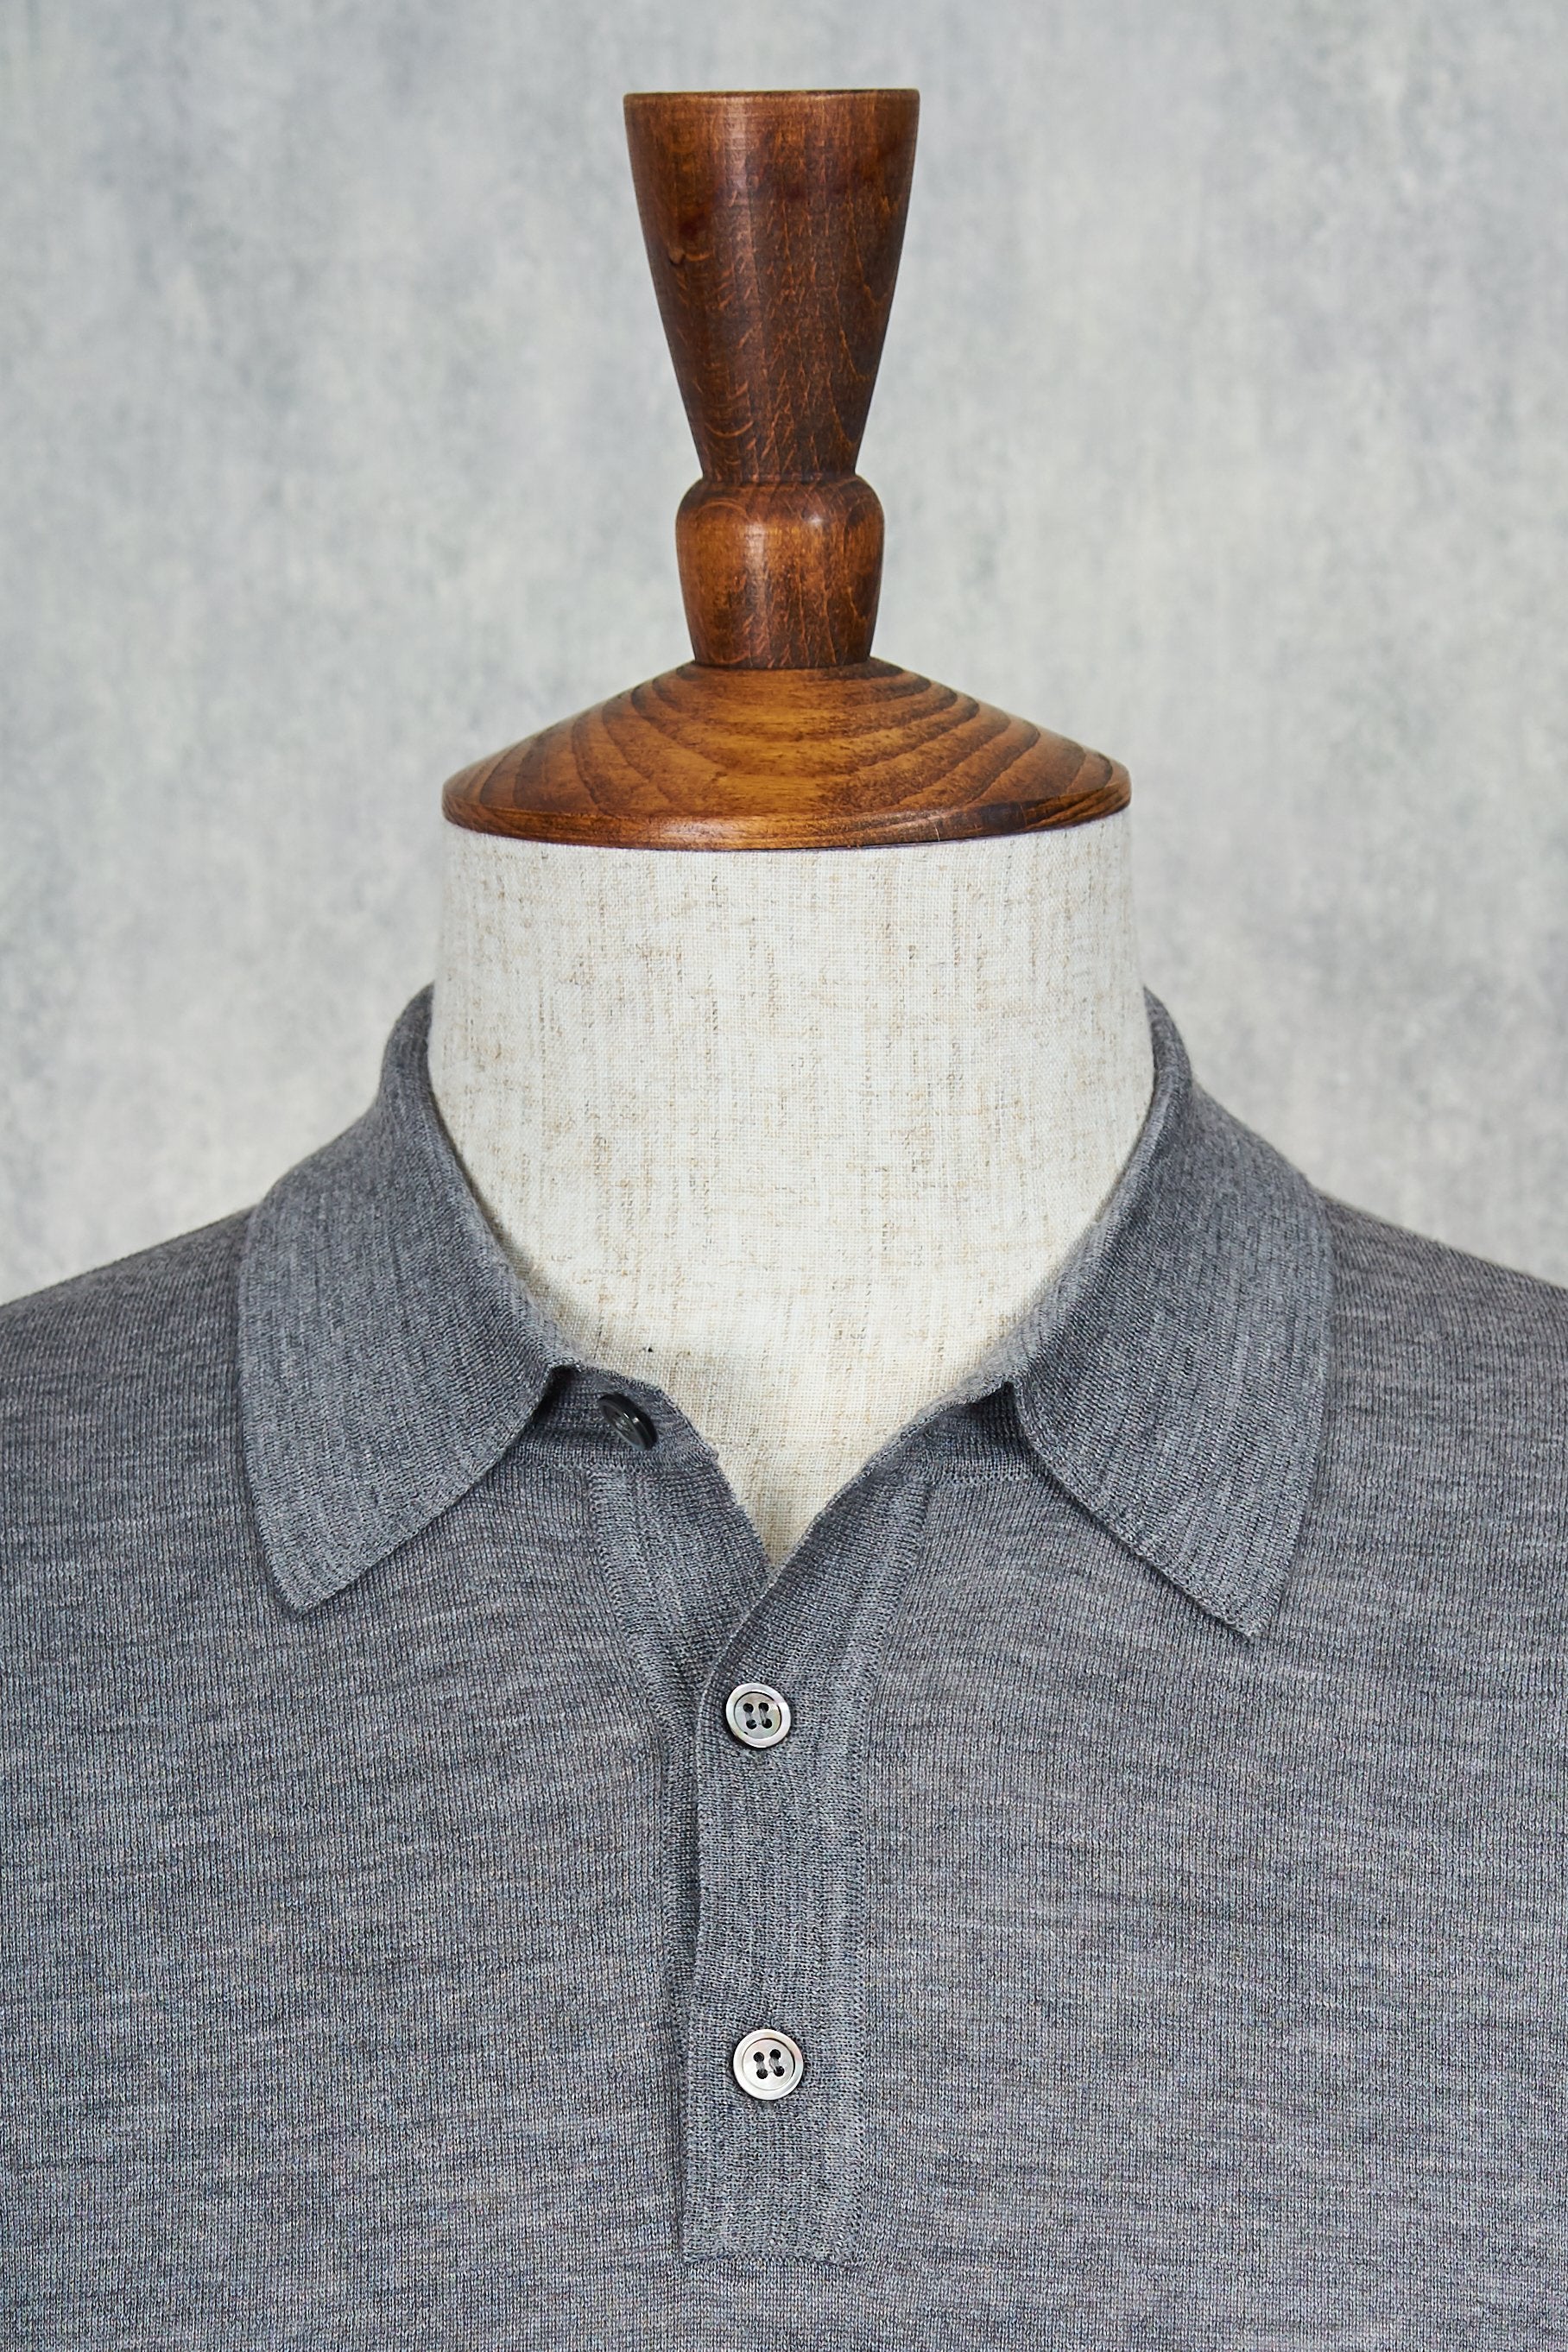 Ascot Chang Grey Extra-Fine Merino Wool Polo